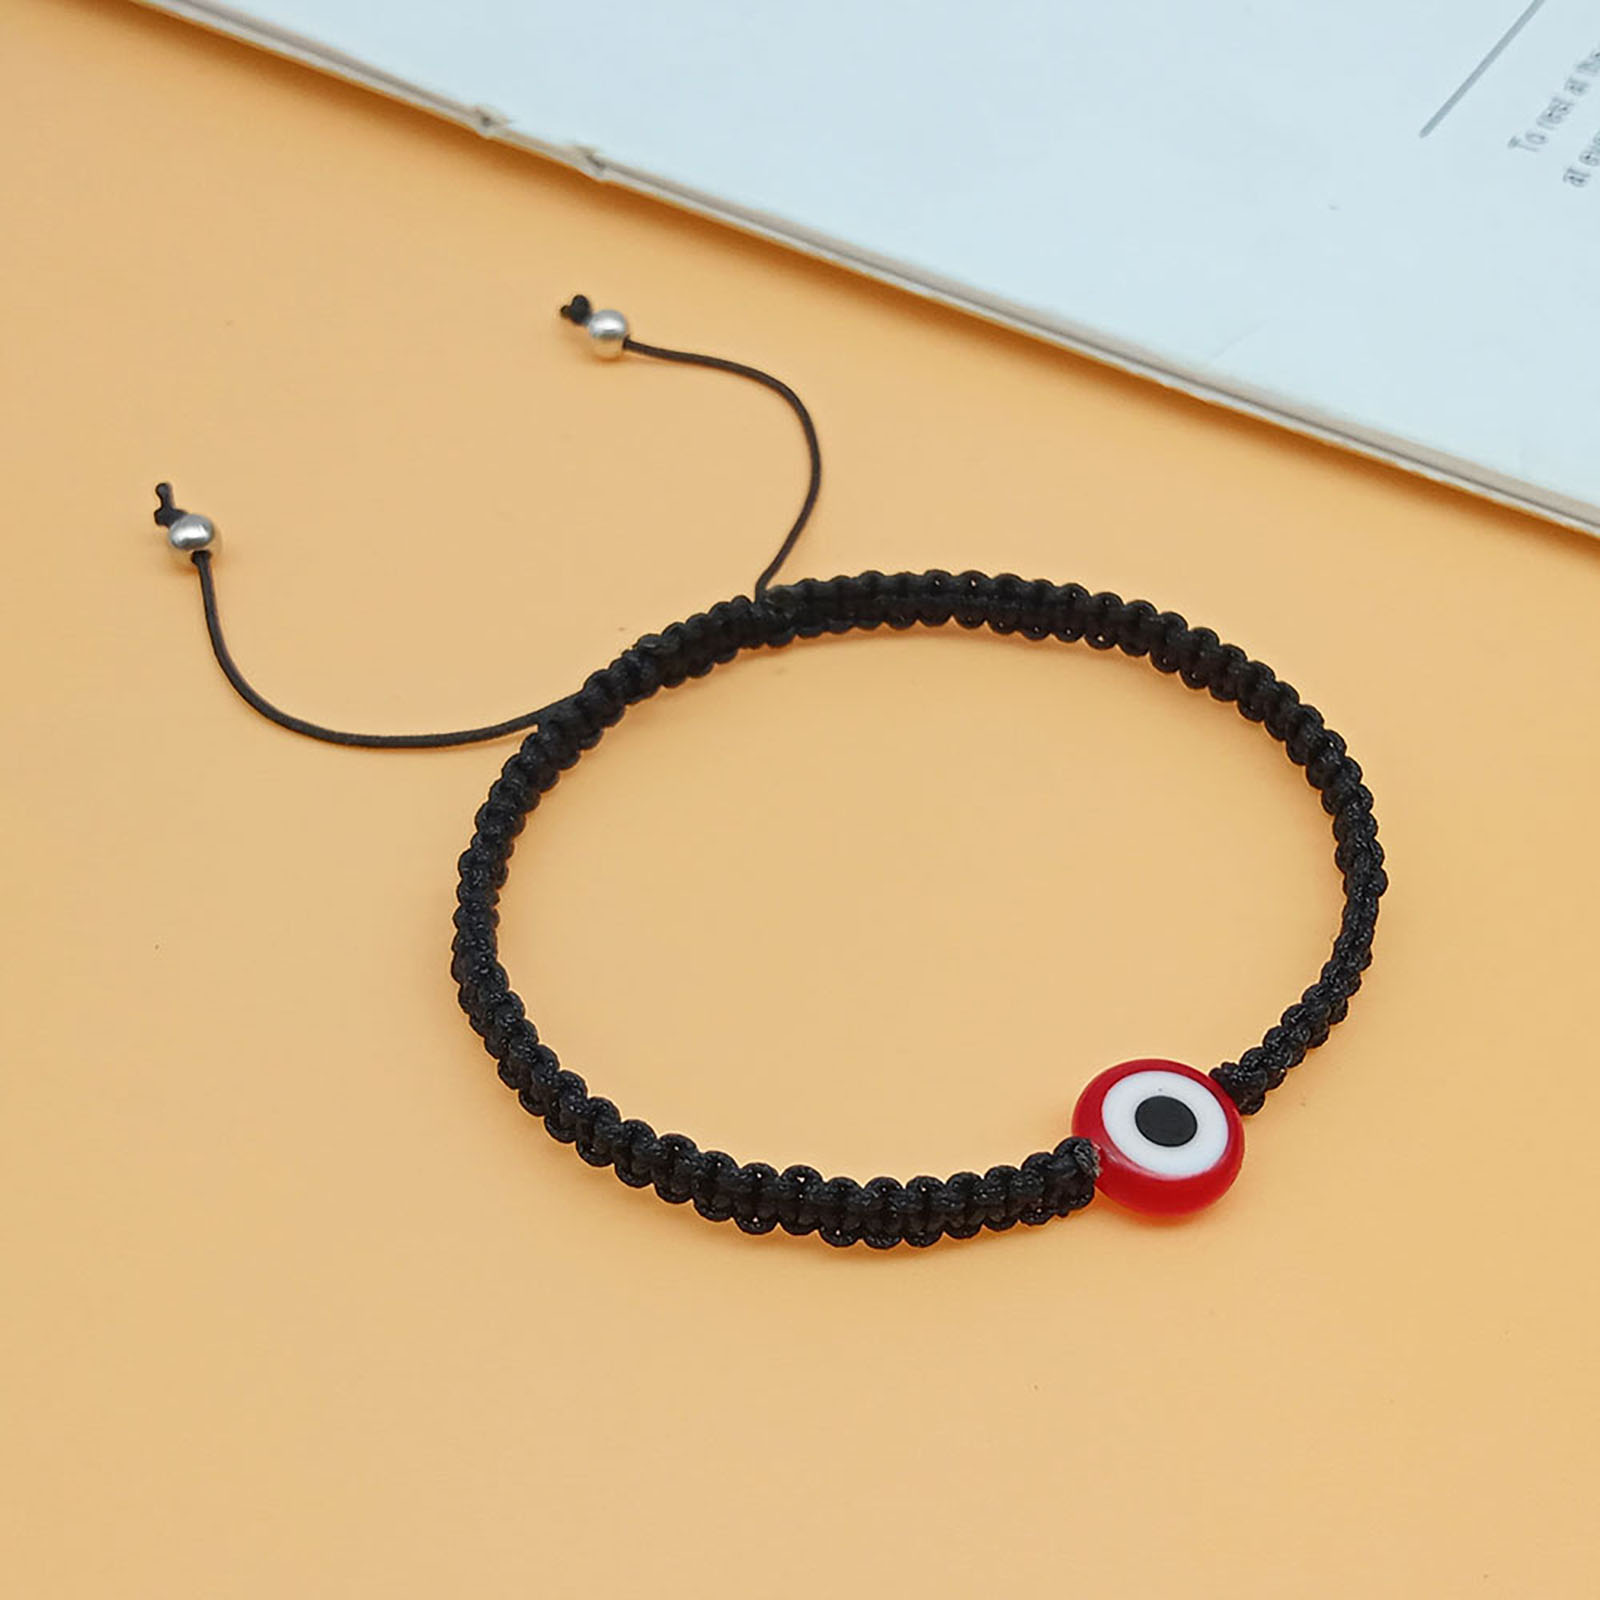 3:Red Eyed Black Rope Bracelet